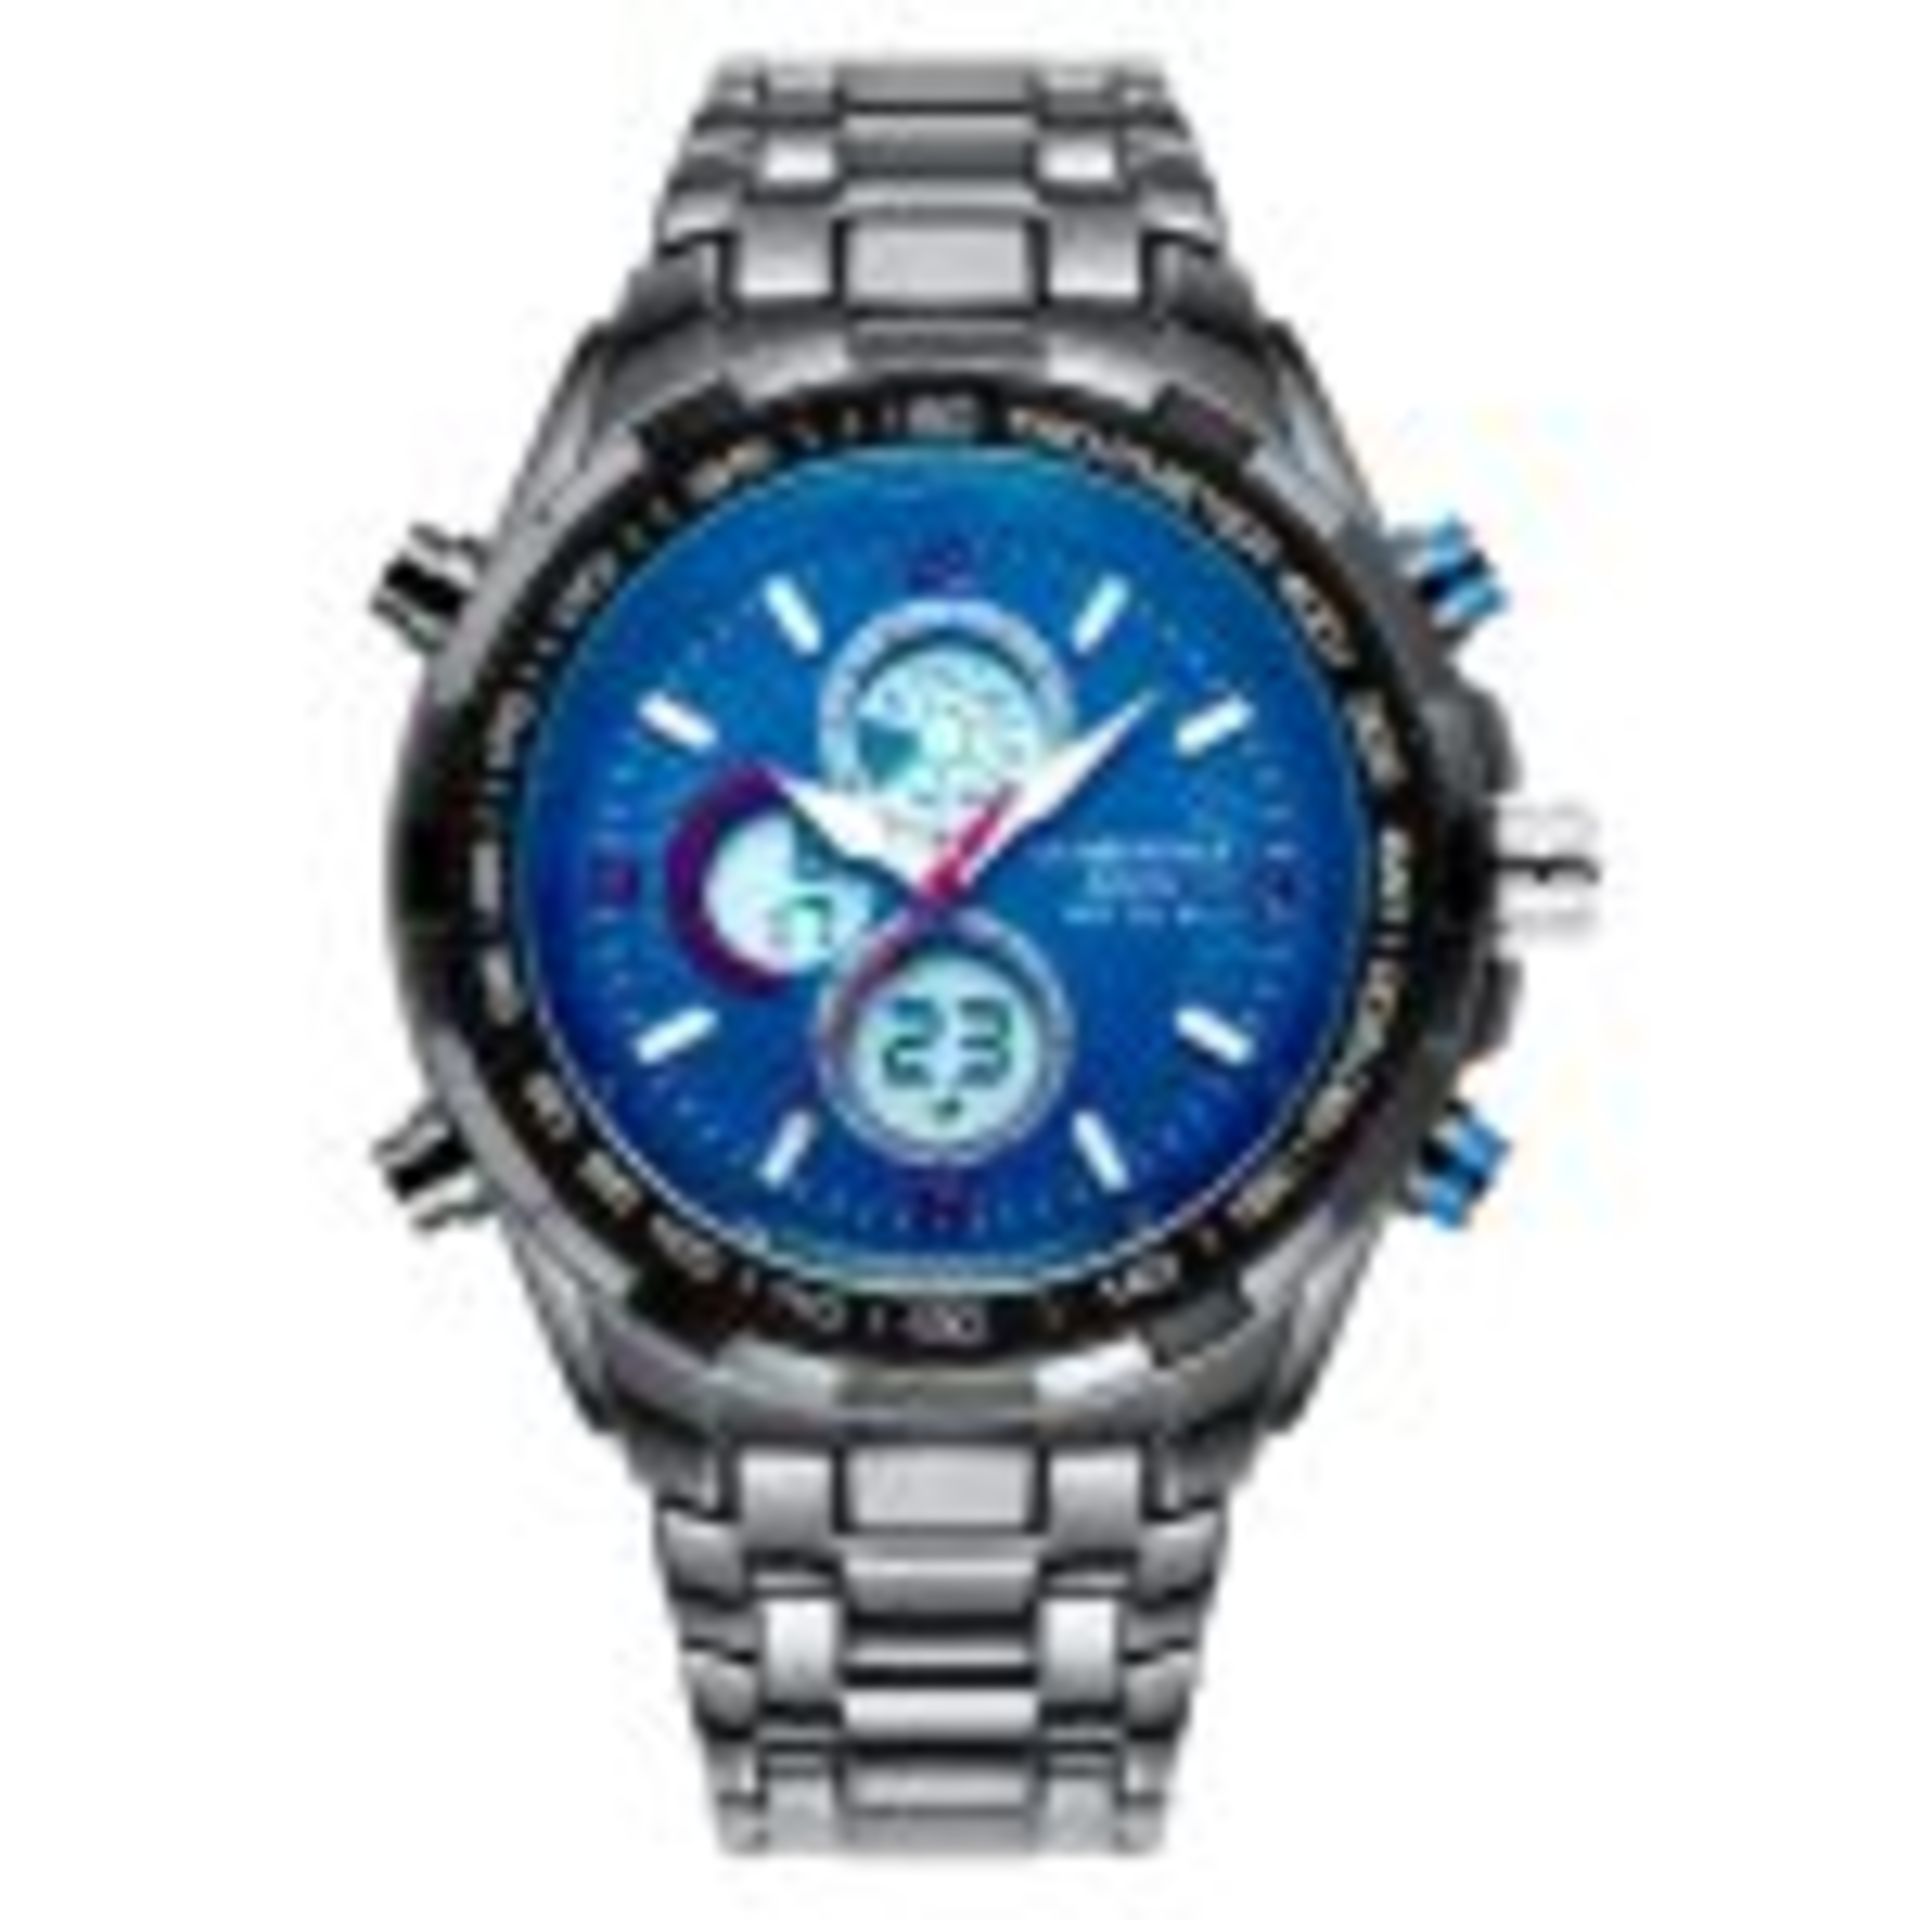 V *TRADE QTY* Brand New Gents Globenfeld Blue Sport watch - Shark Grey Strap - Tinted Glass - SRP £